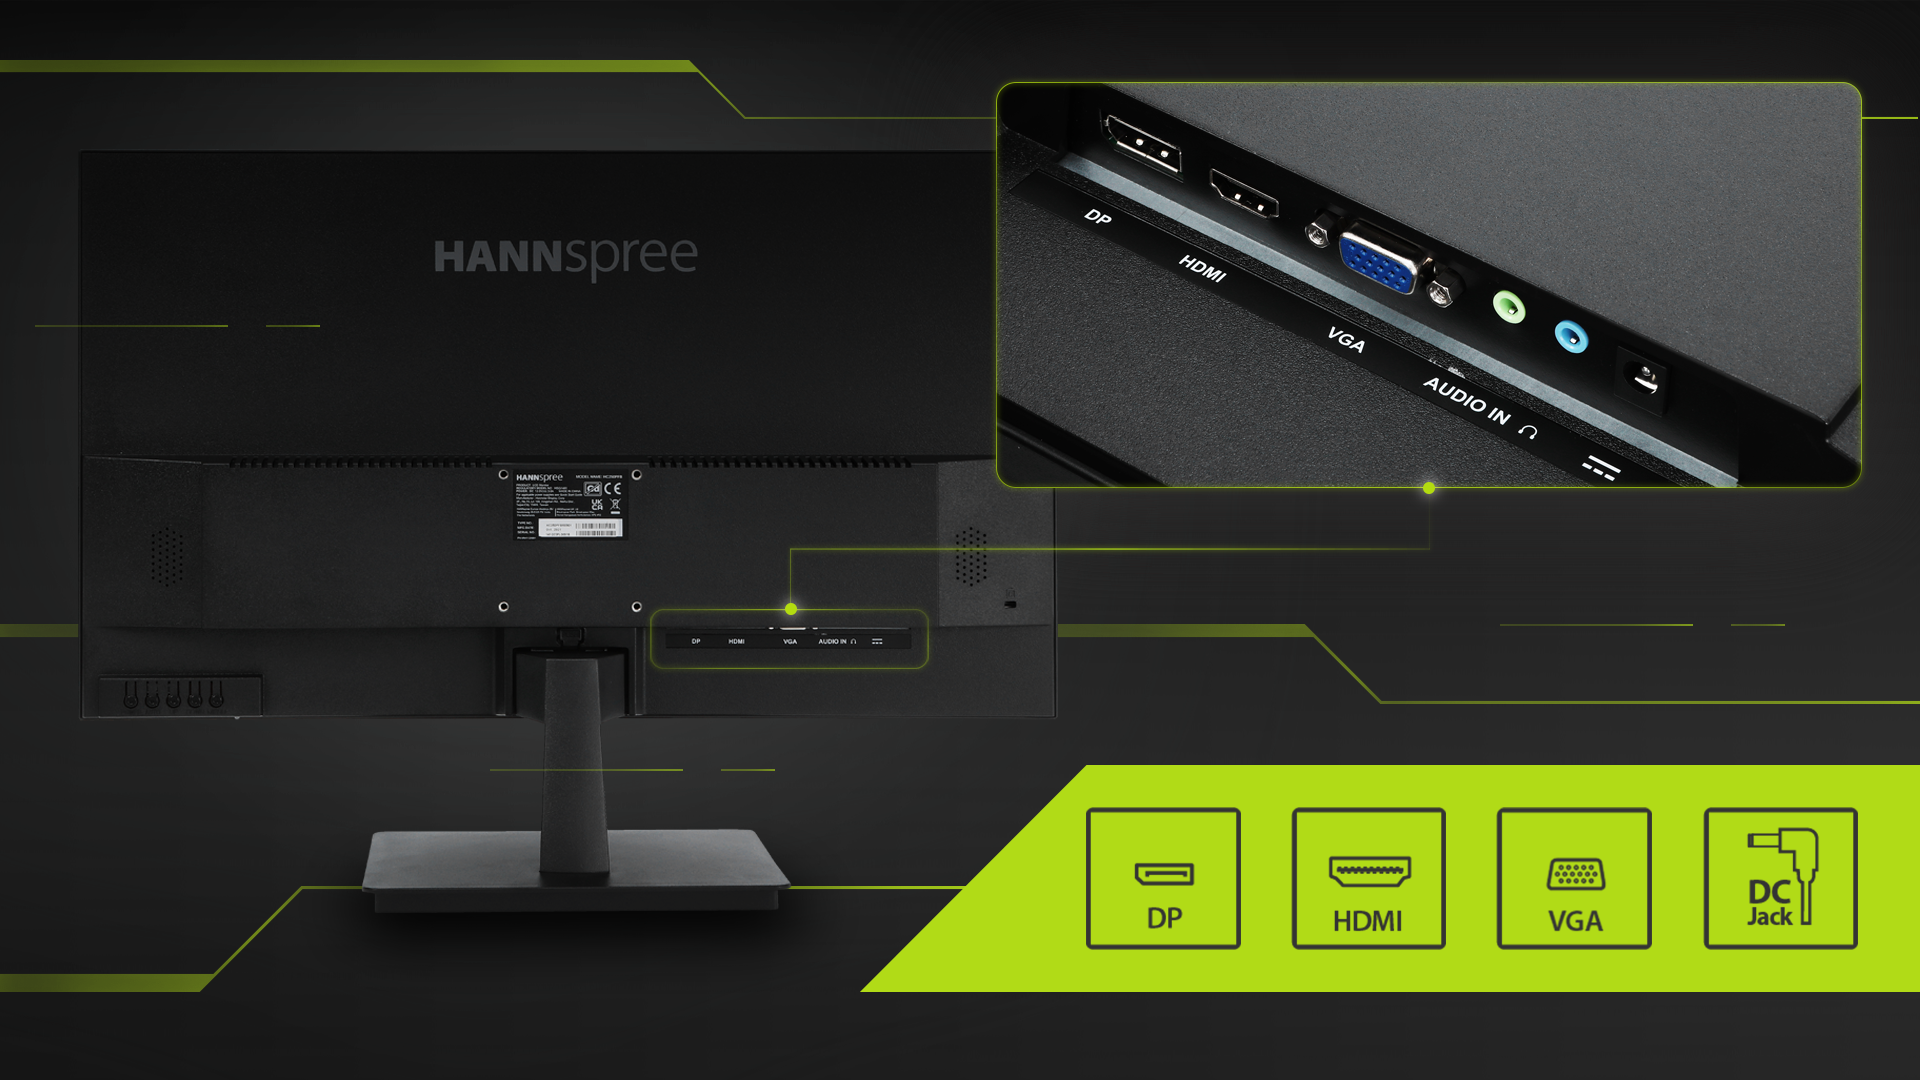 HC250PFB features a comprehensive input interface